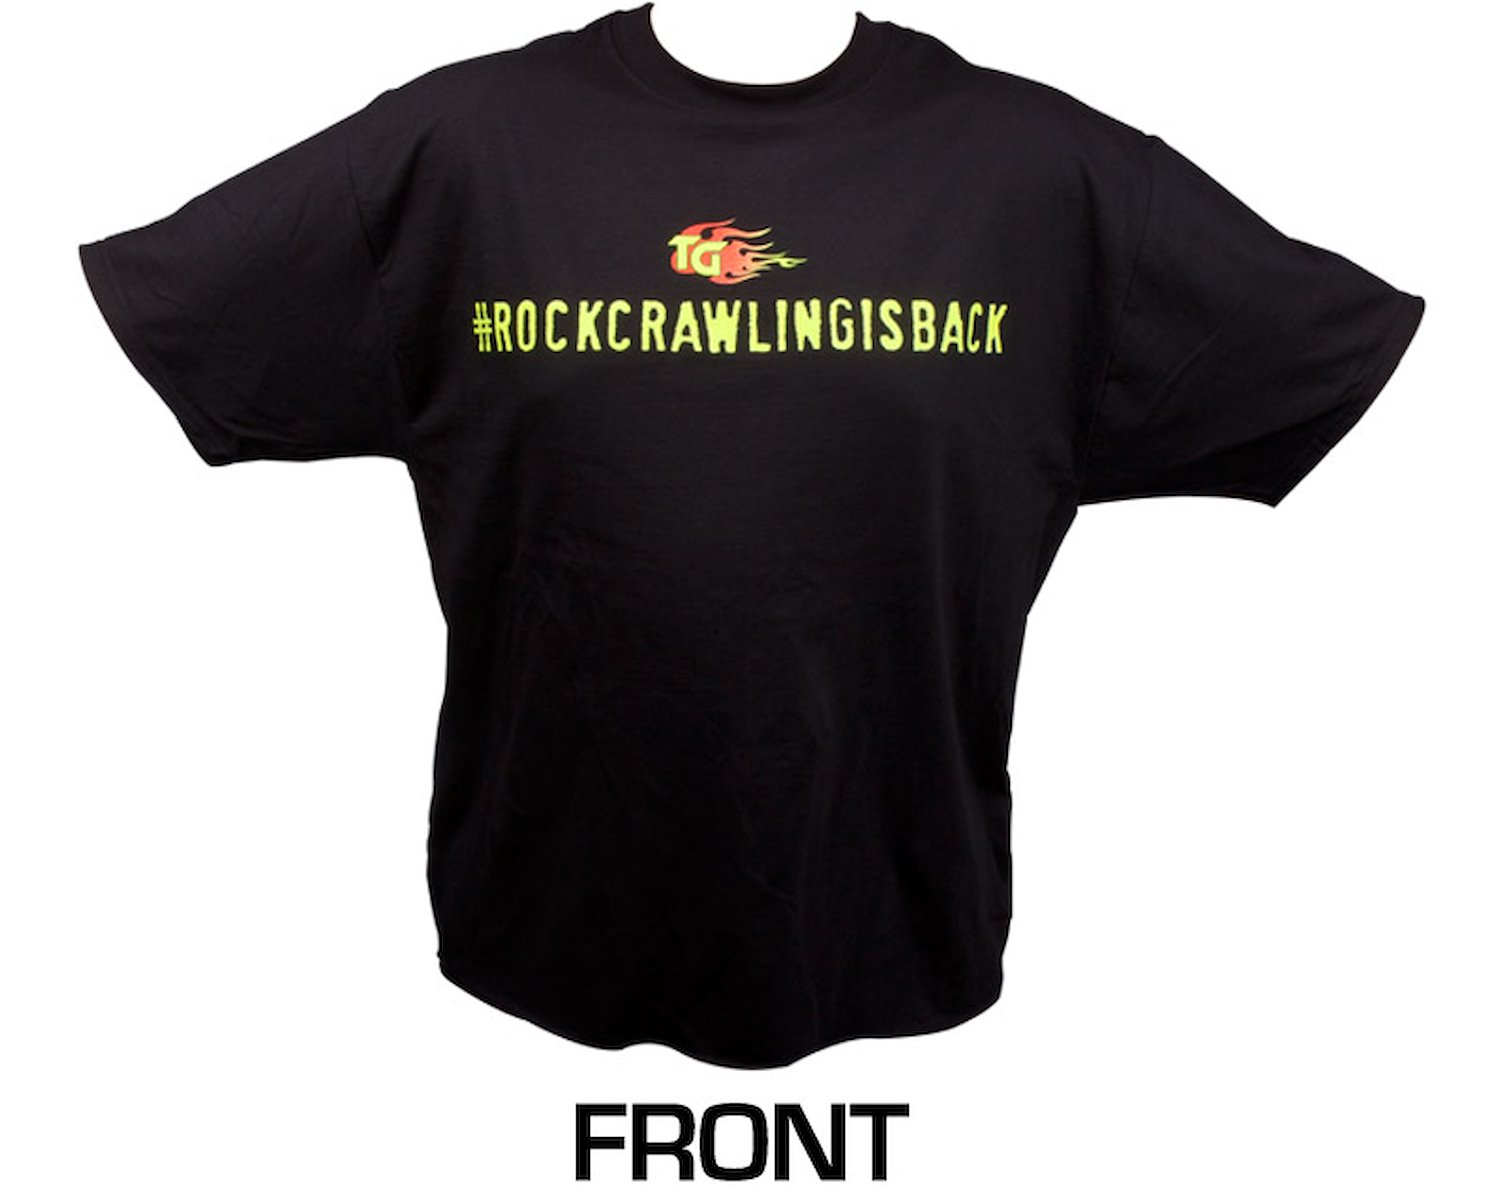 Short Sleeved Black Shirt #rockcrawlingisback Medium